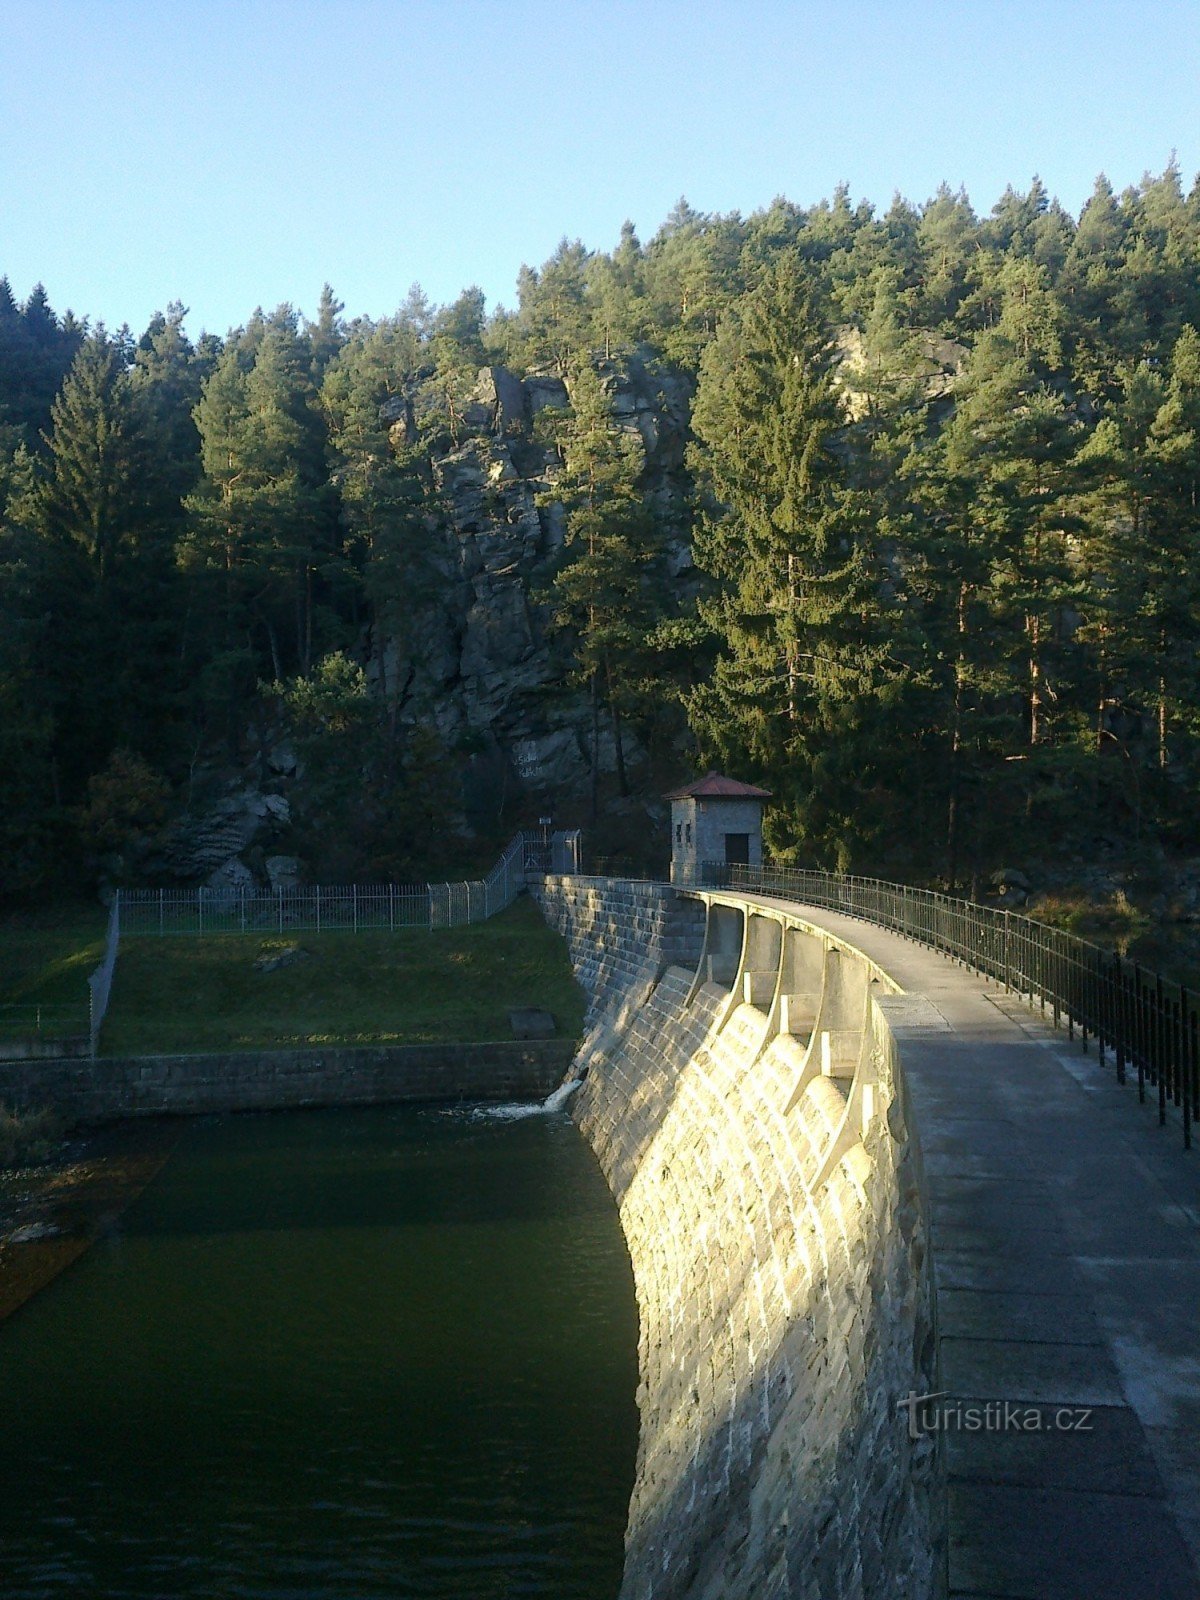 Small dam near Želiva.